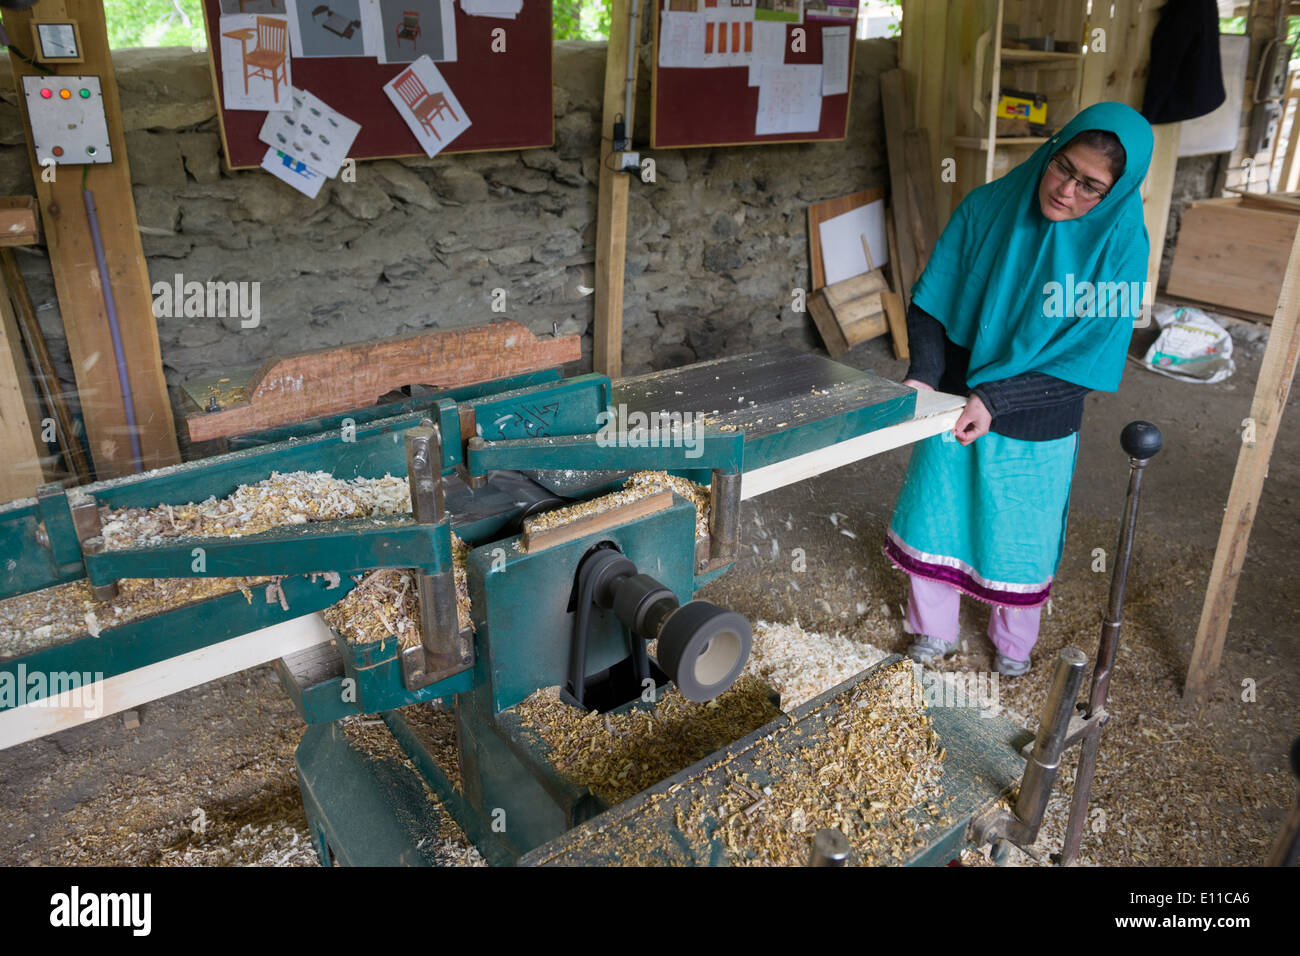 woman-using-a-power-tool-at-a-charity-teaching-pakistani-women-carpentry-E11CA6.jpg